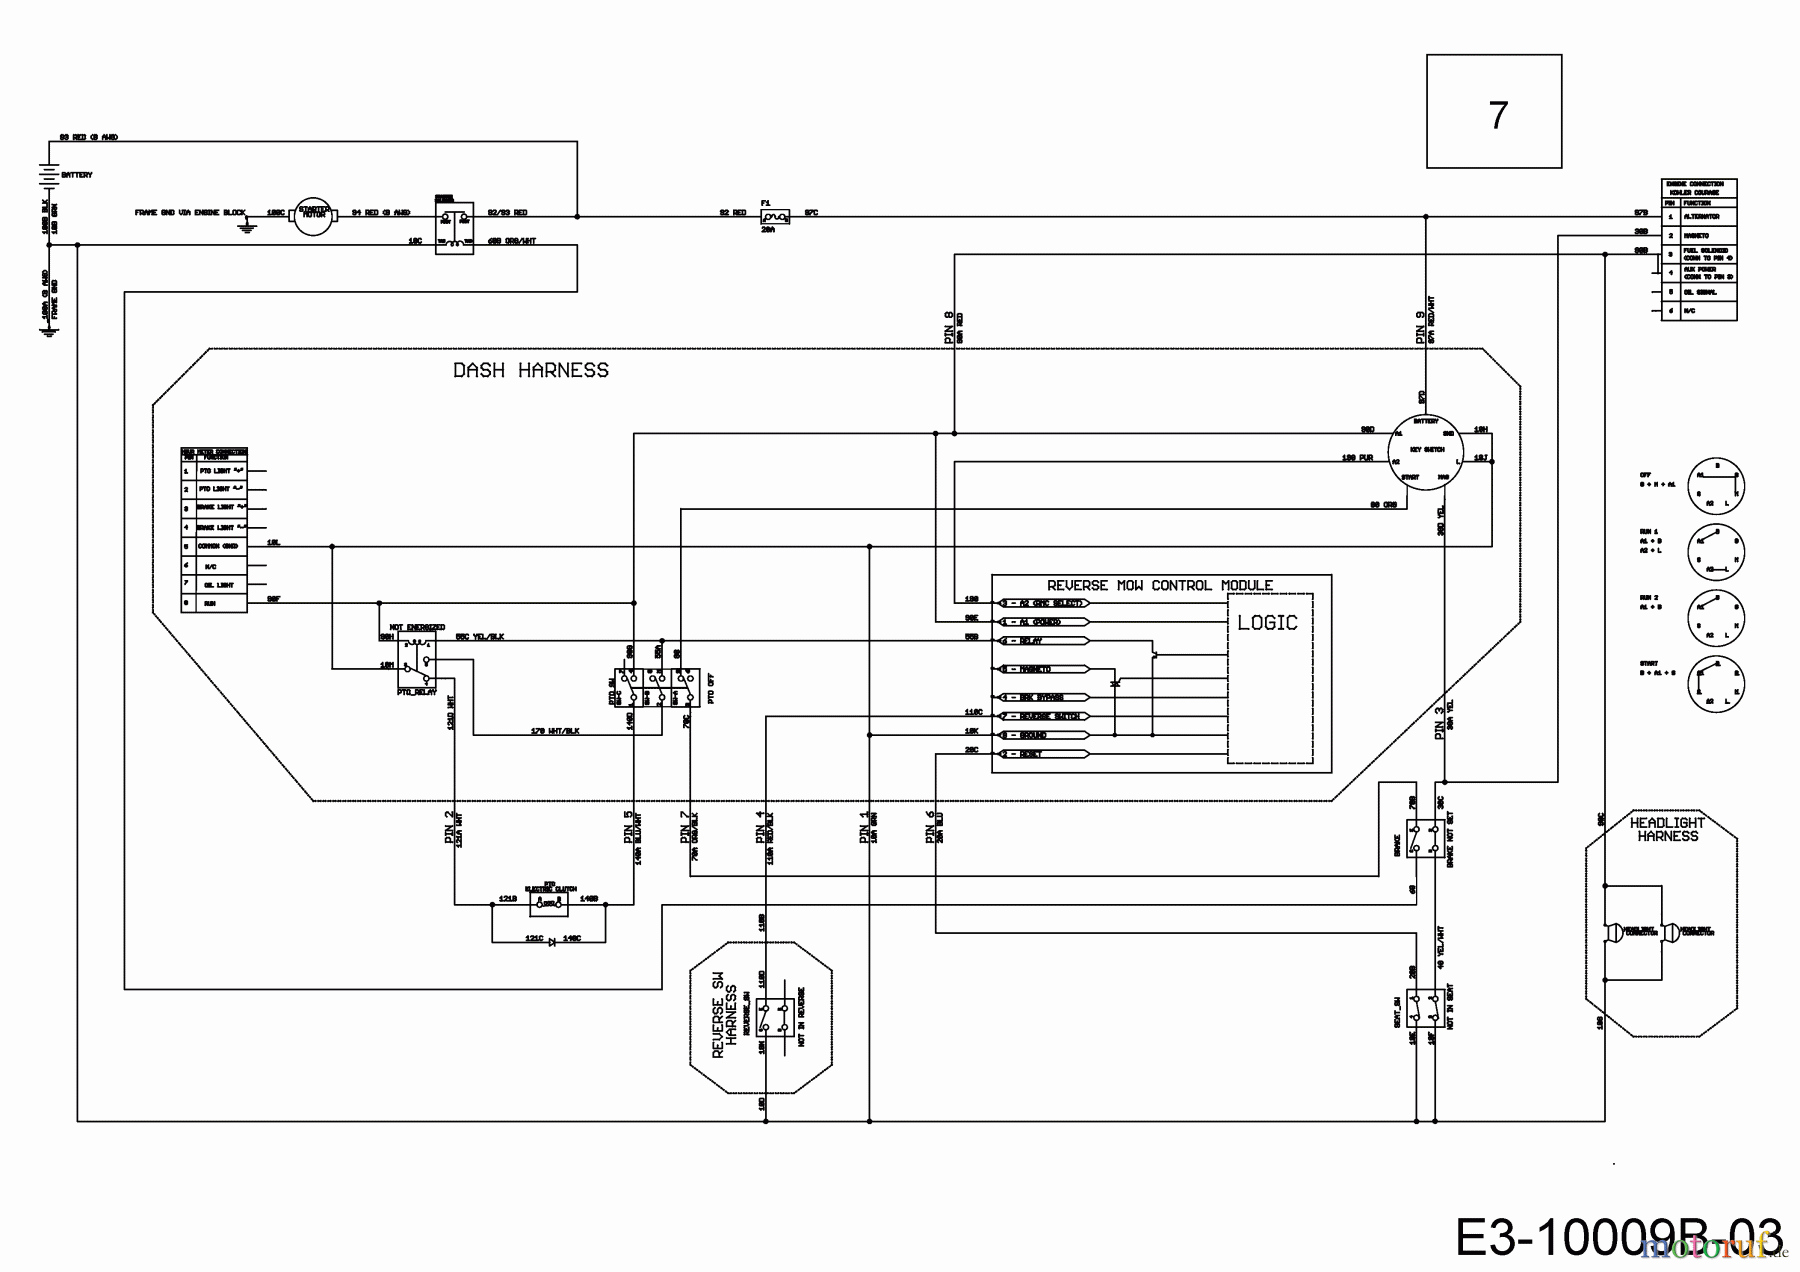  Cub Cadet Lawn tractors XT1 OS96 13B8A1CF603  (2019) Wiring diagram dashboard